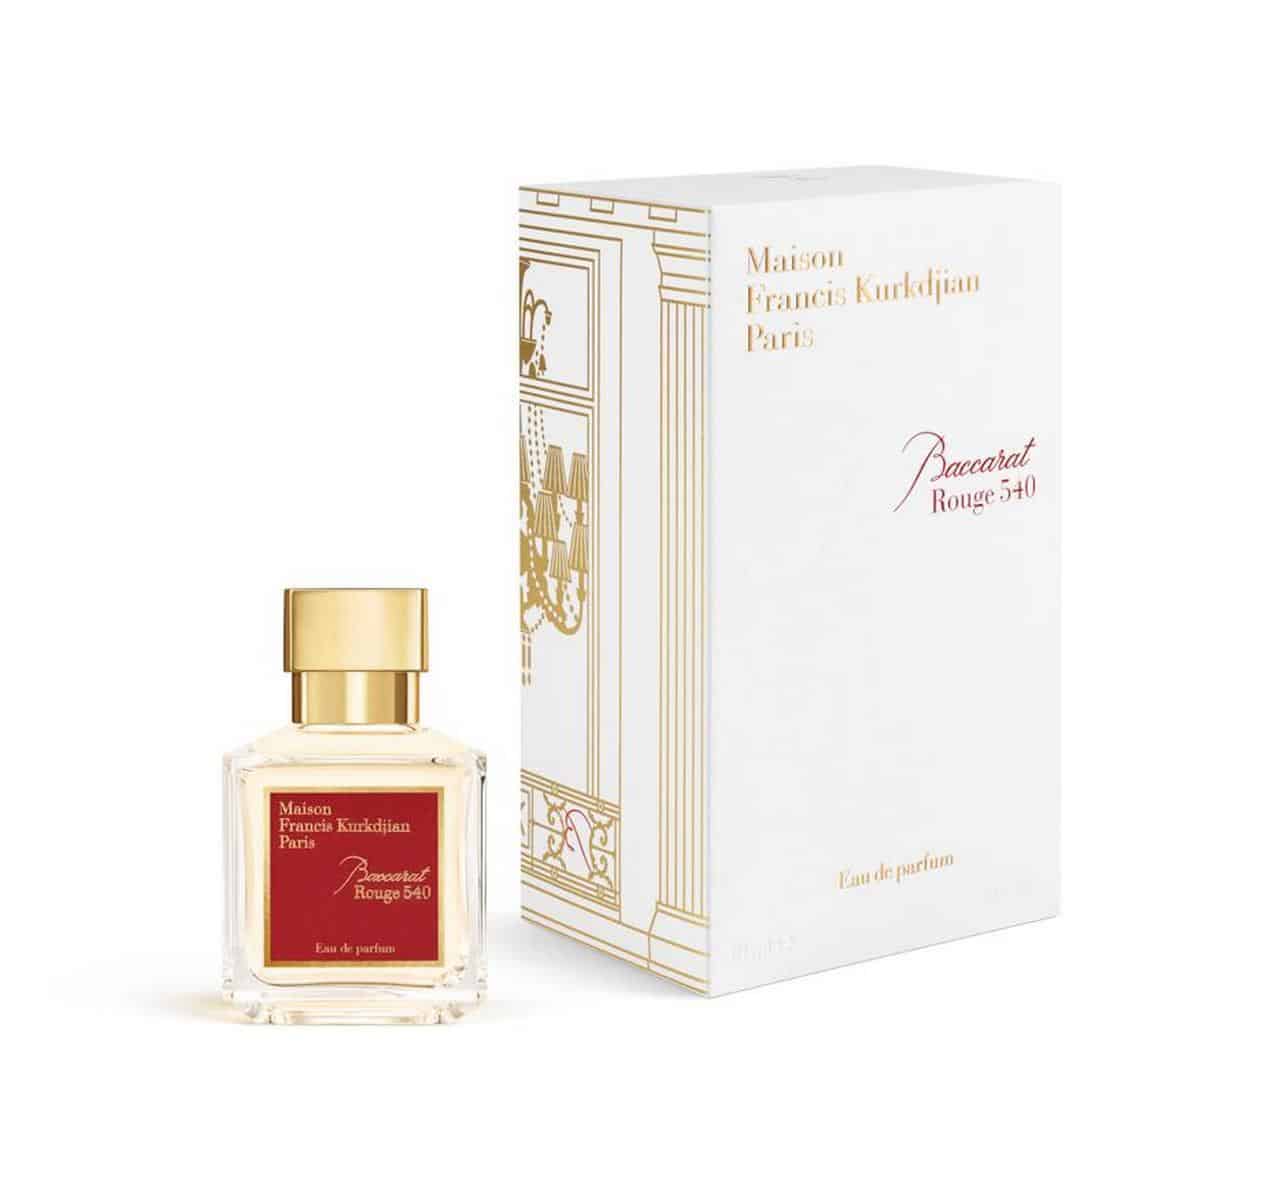 Baccarat Rouge 540 Eau de Parfum by Maison Francis Kurkdjian